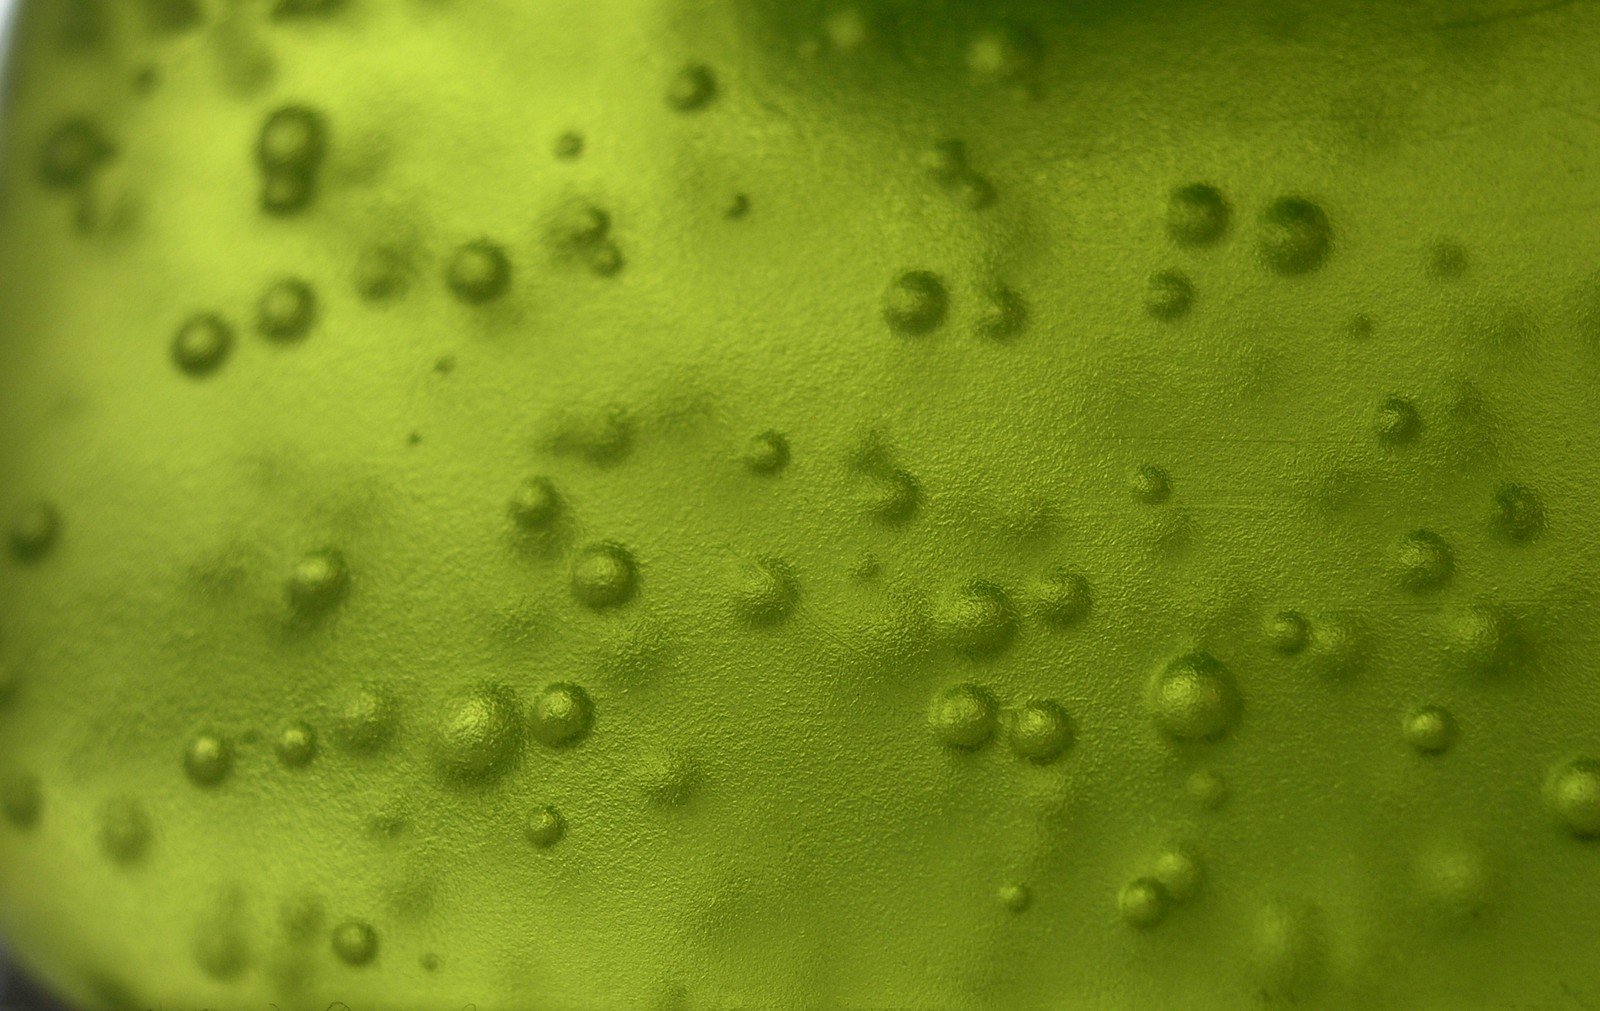 a close up of a liquid filled bottle